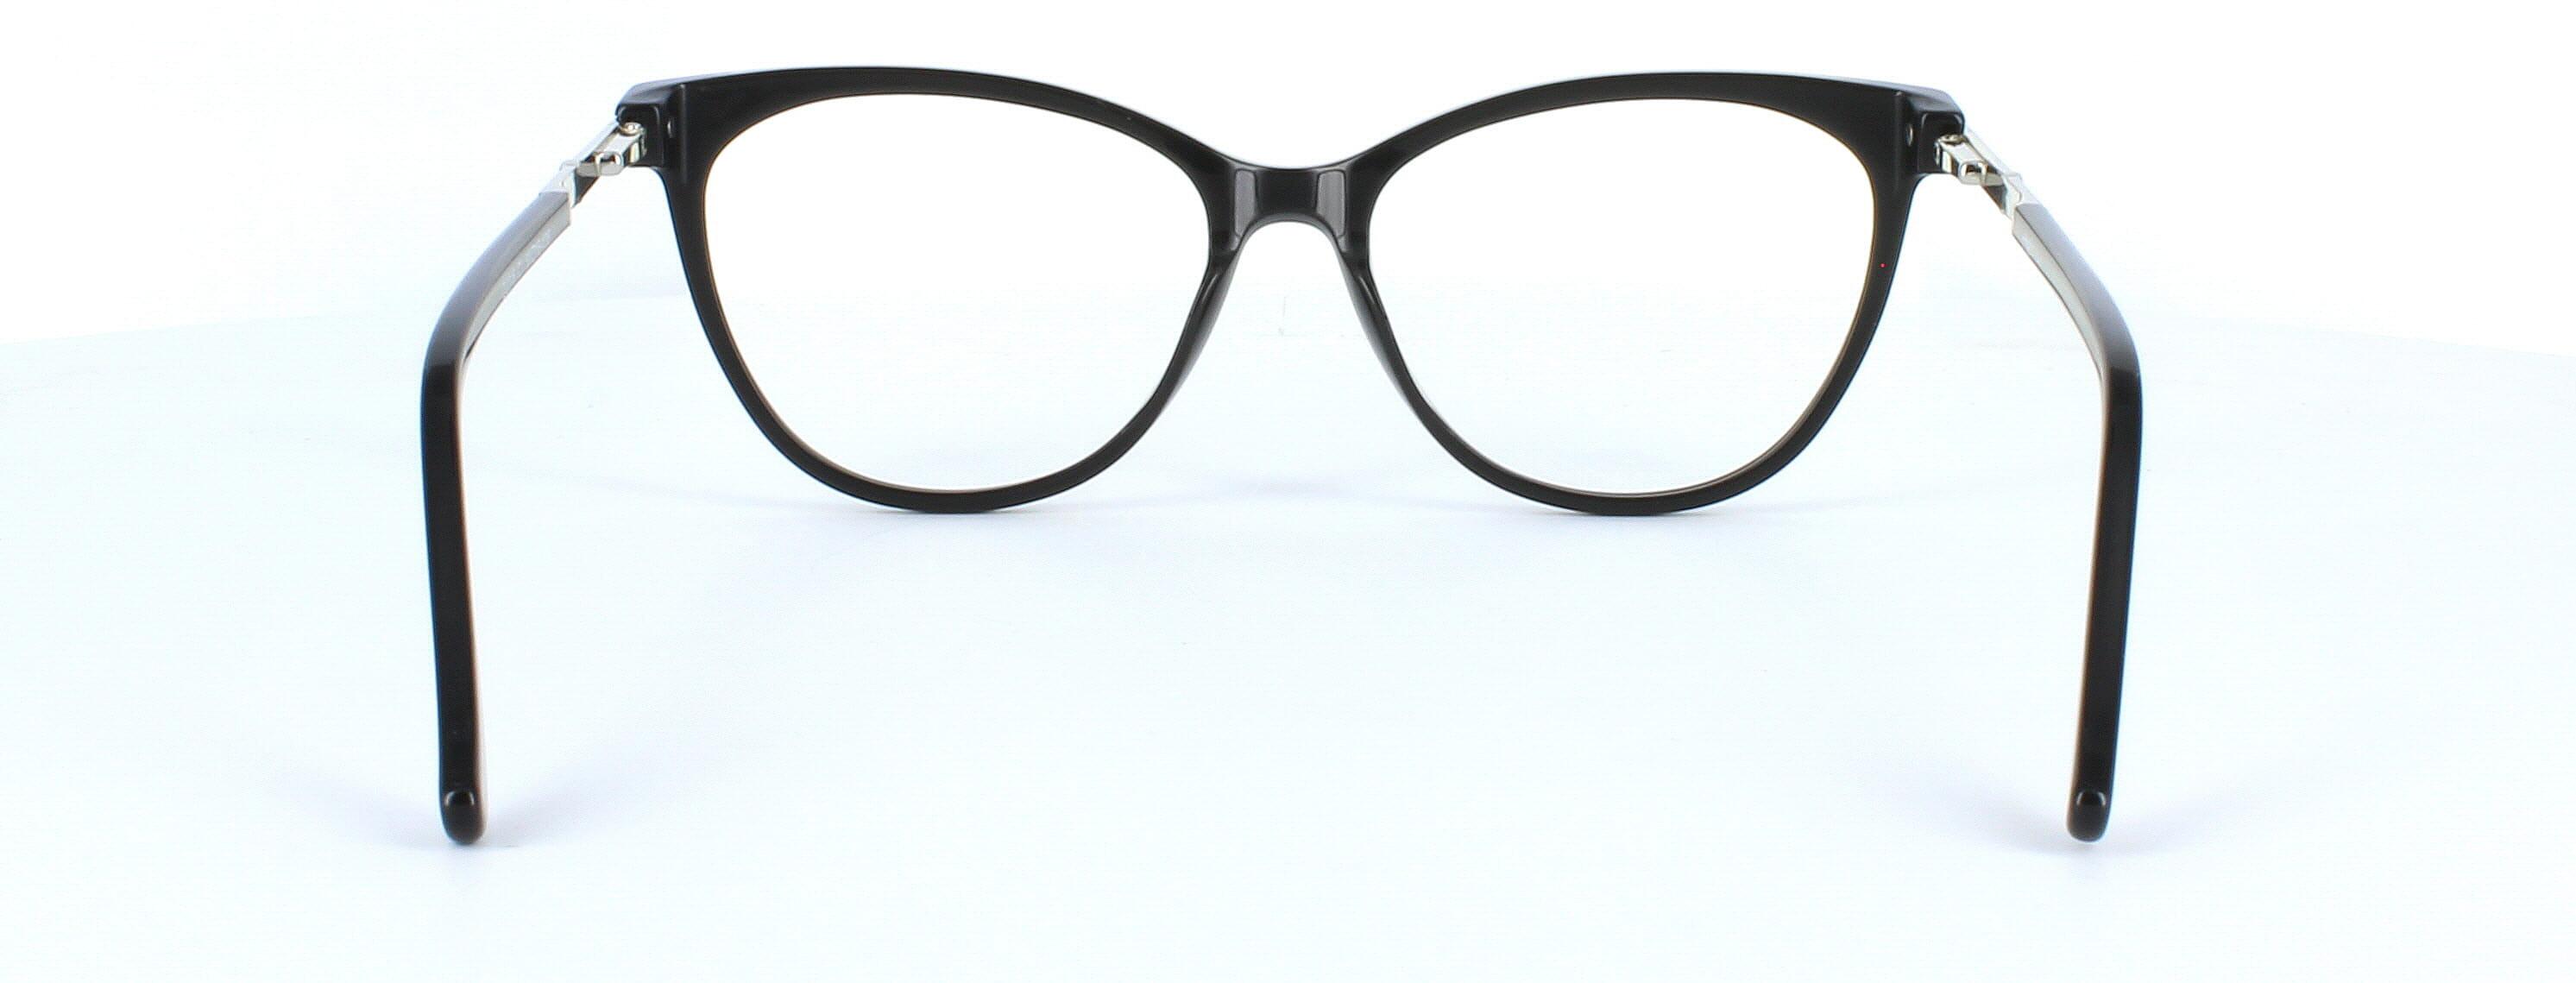 Verwood - ladies acetate glasses here in shiny black - image view 3